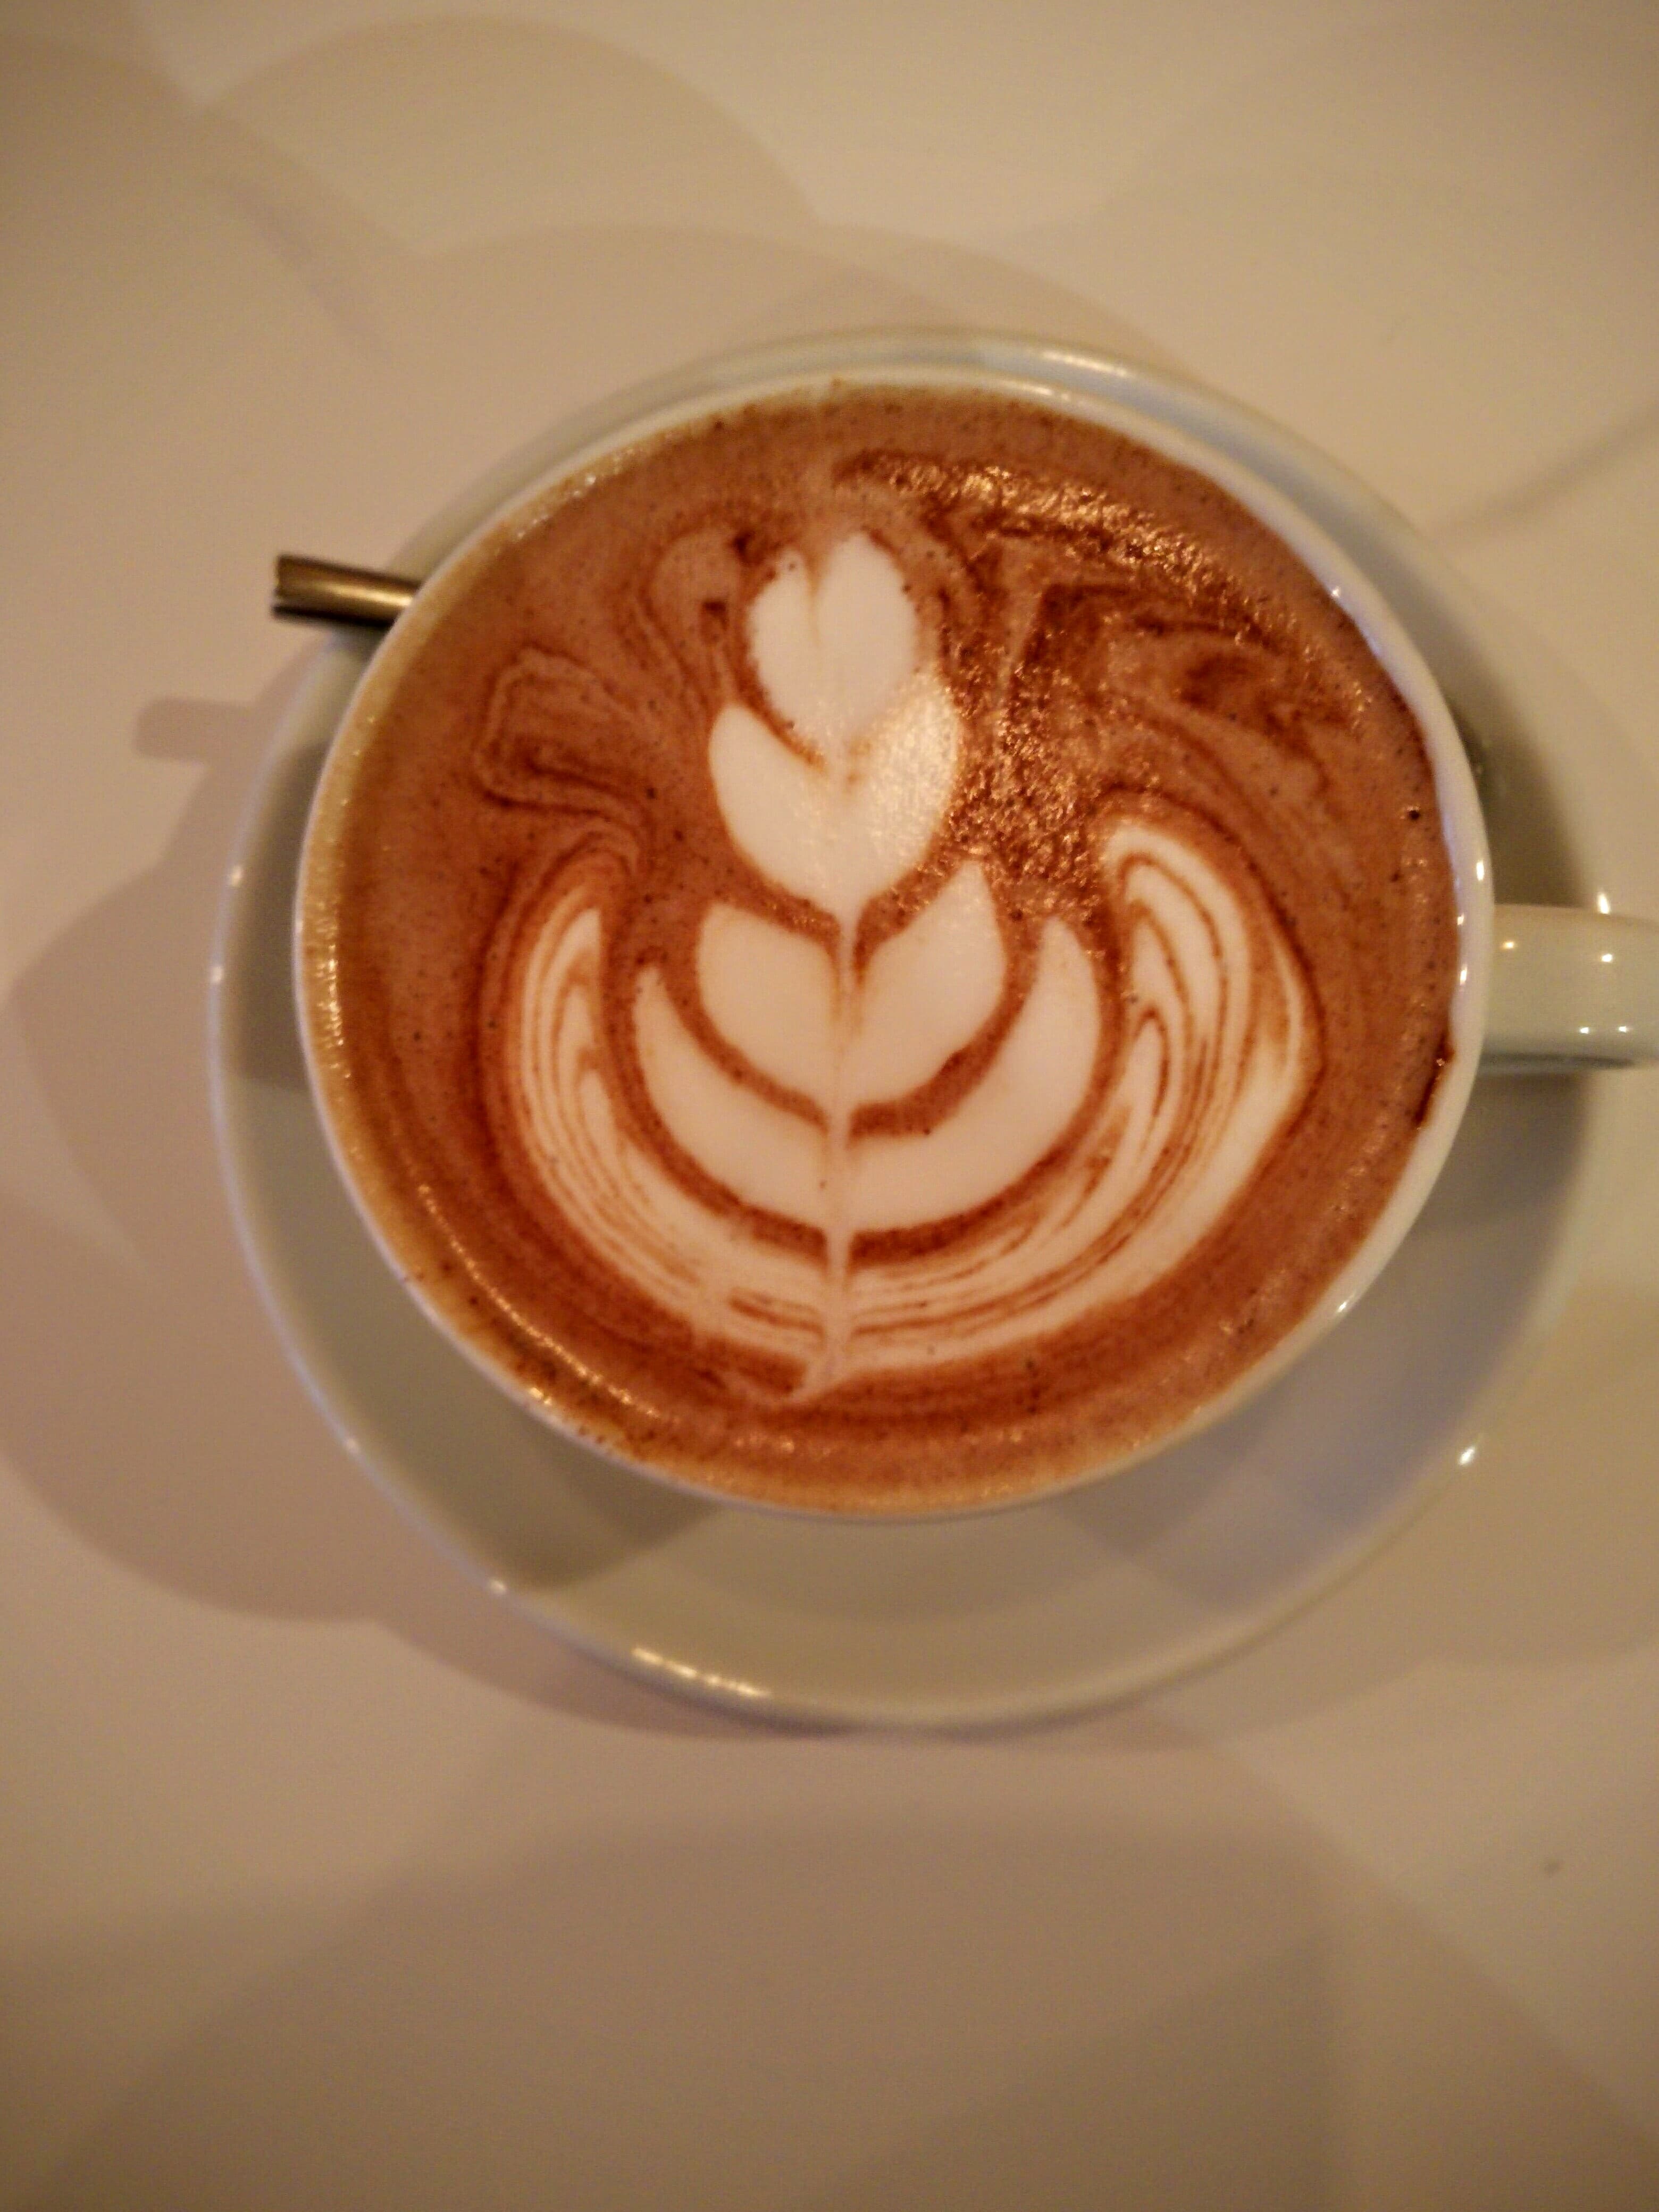 Chocolat chaud latte art Tamper espresso Bar coffee shop Lille - chicon choc